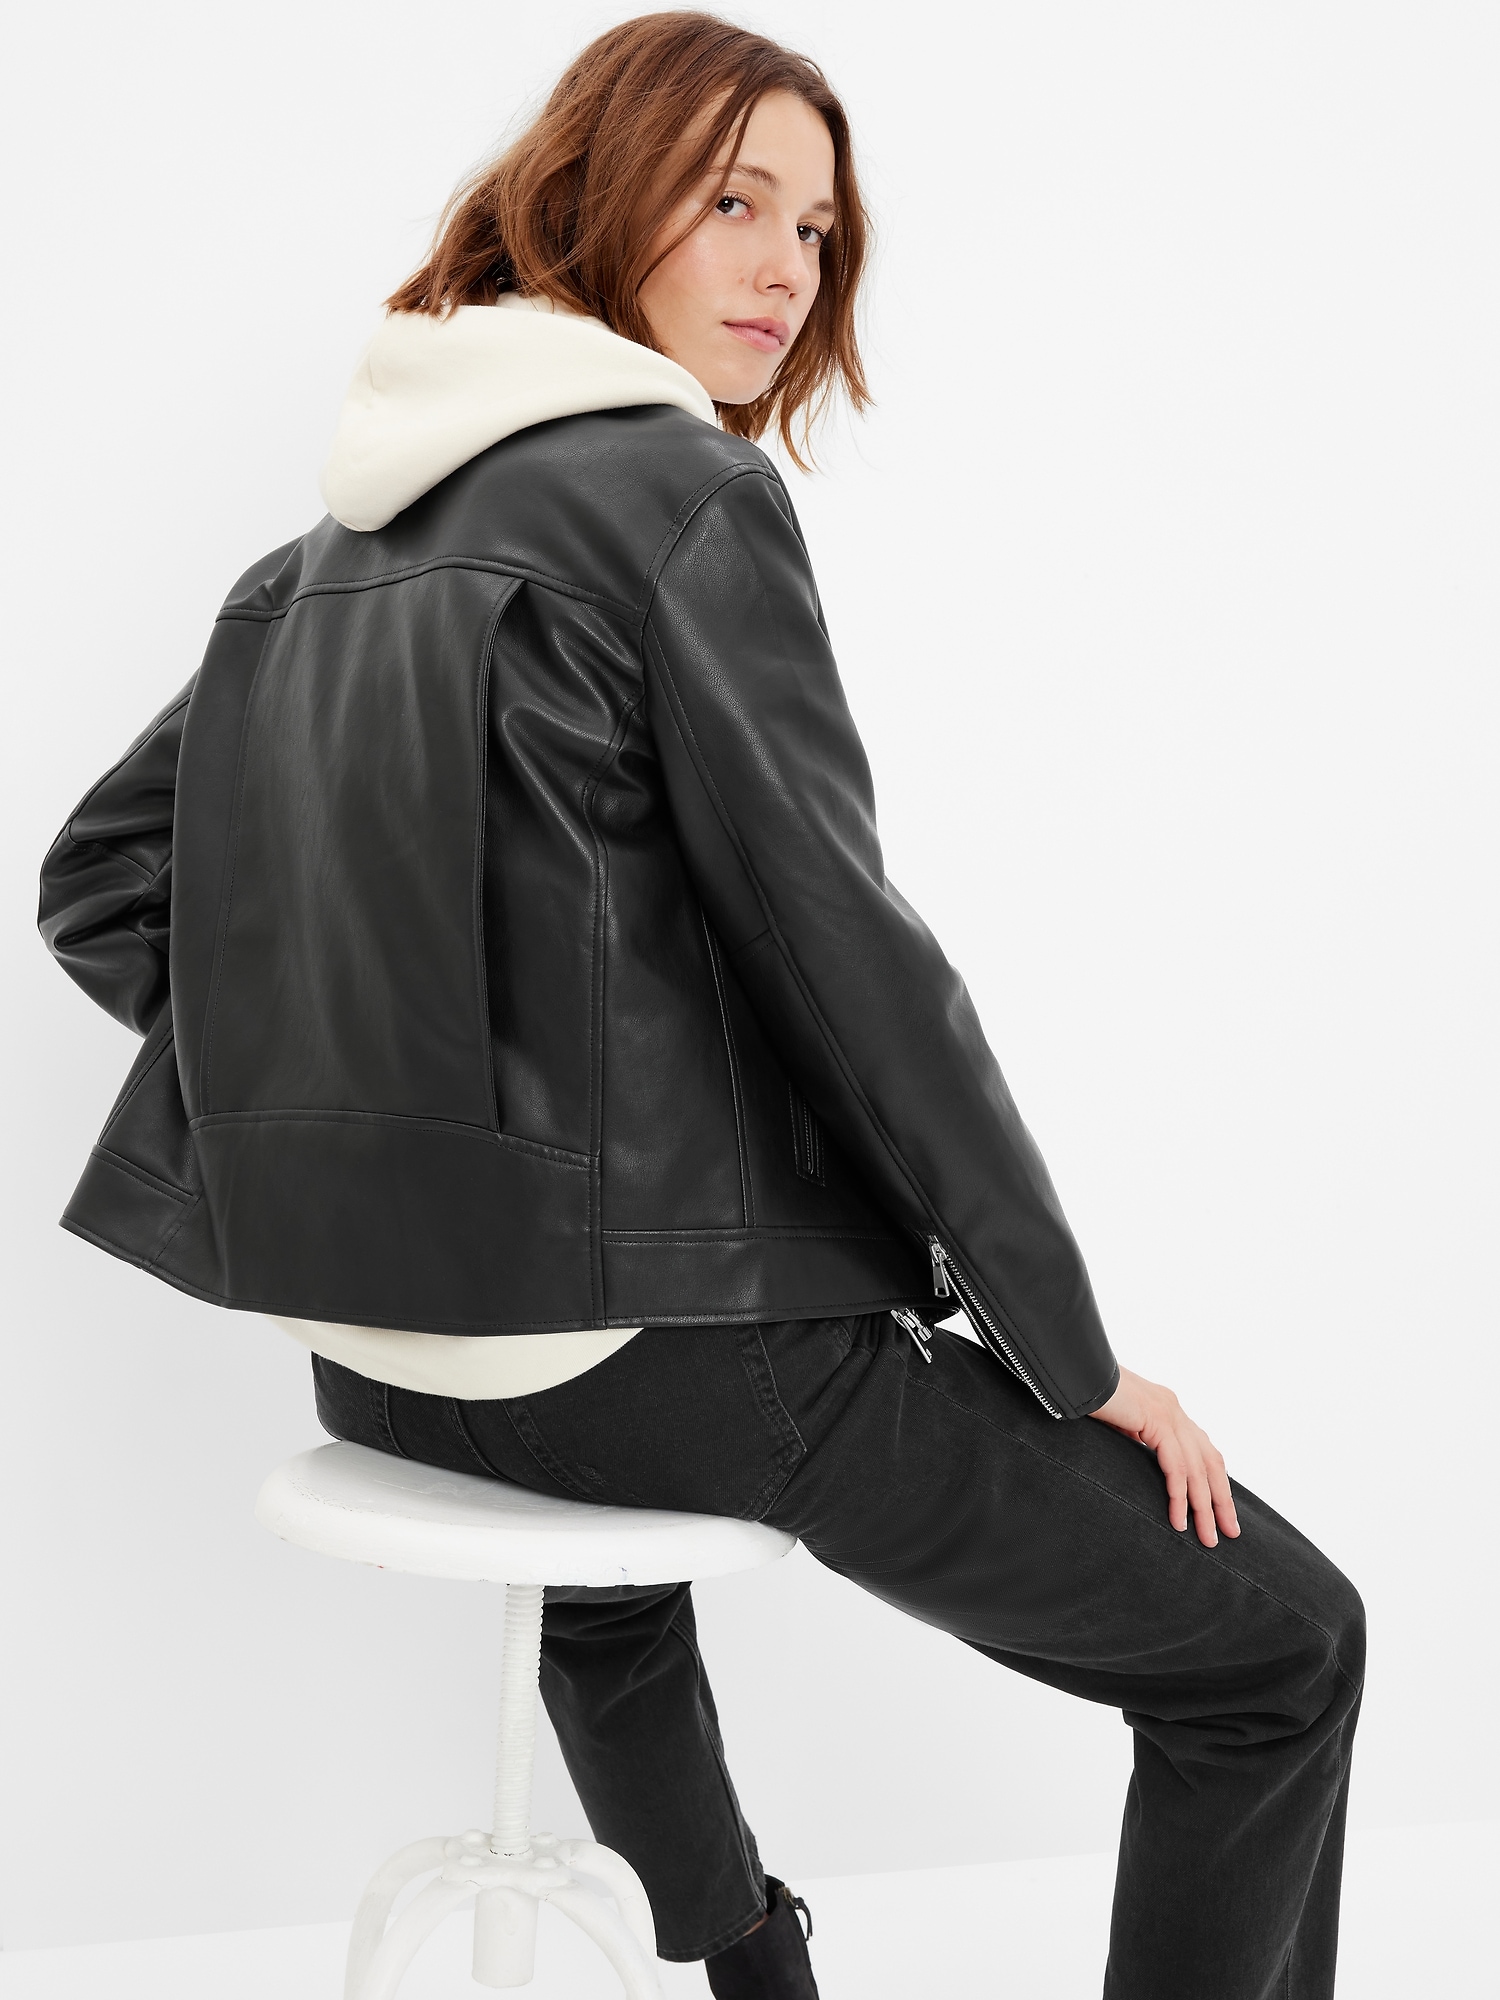 Gap Women's Vegan Leather Moto Jacket